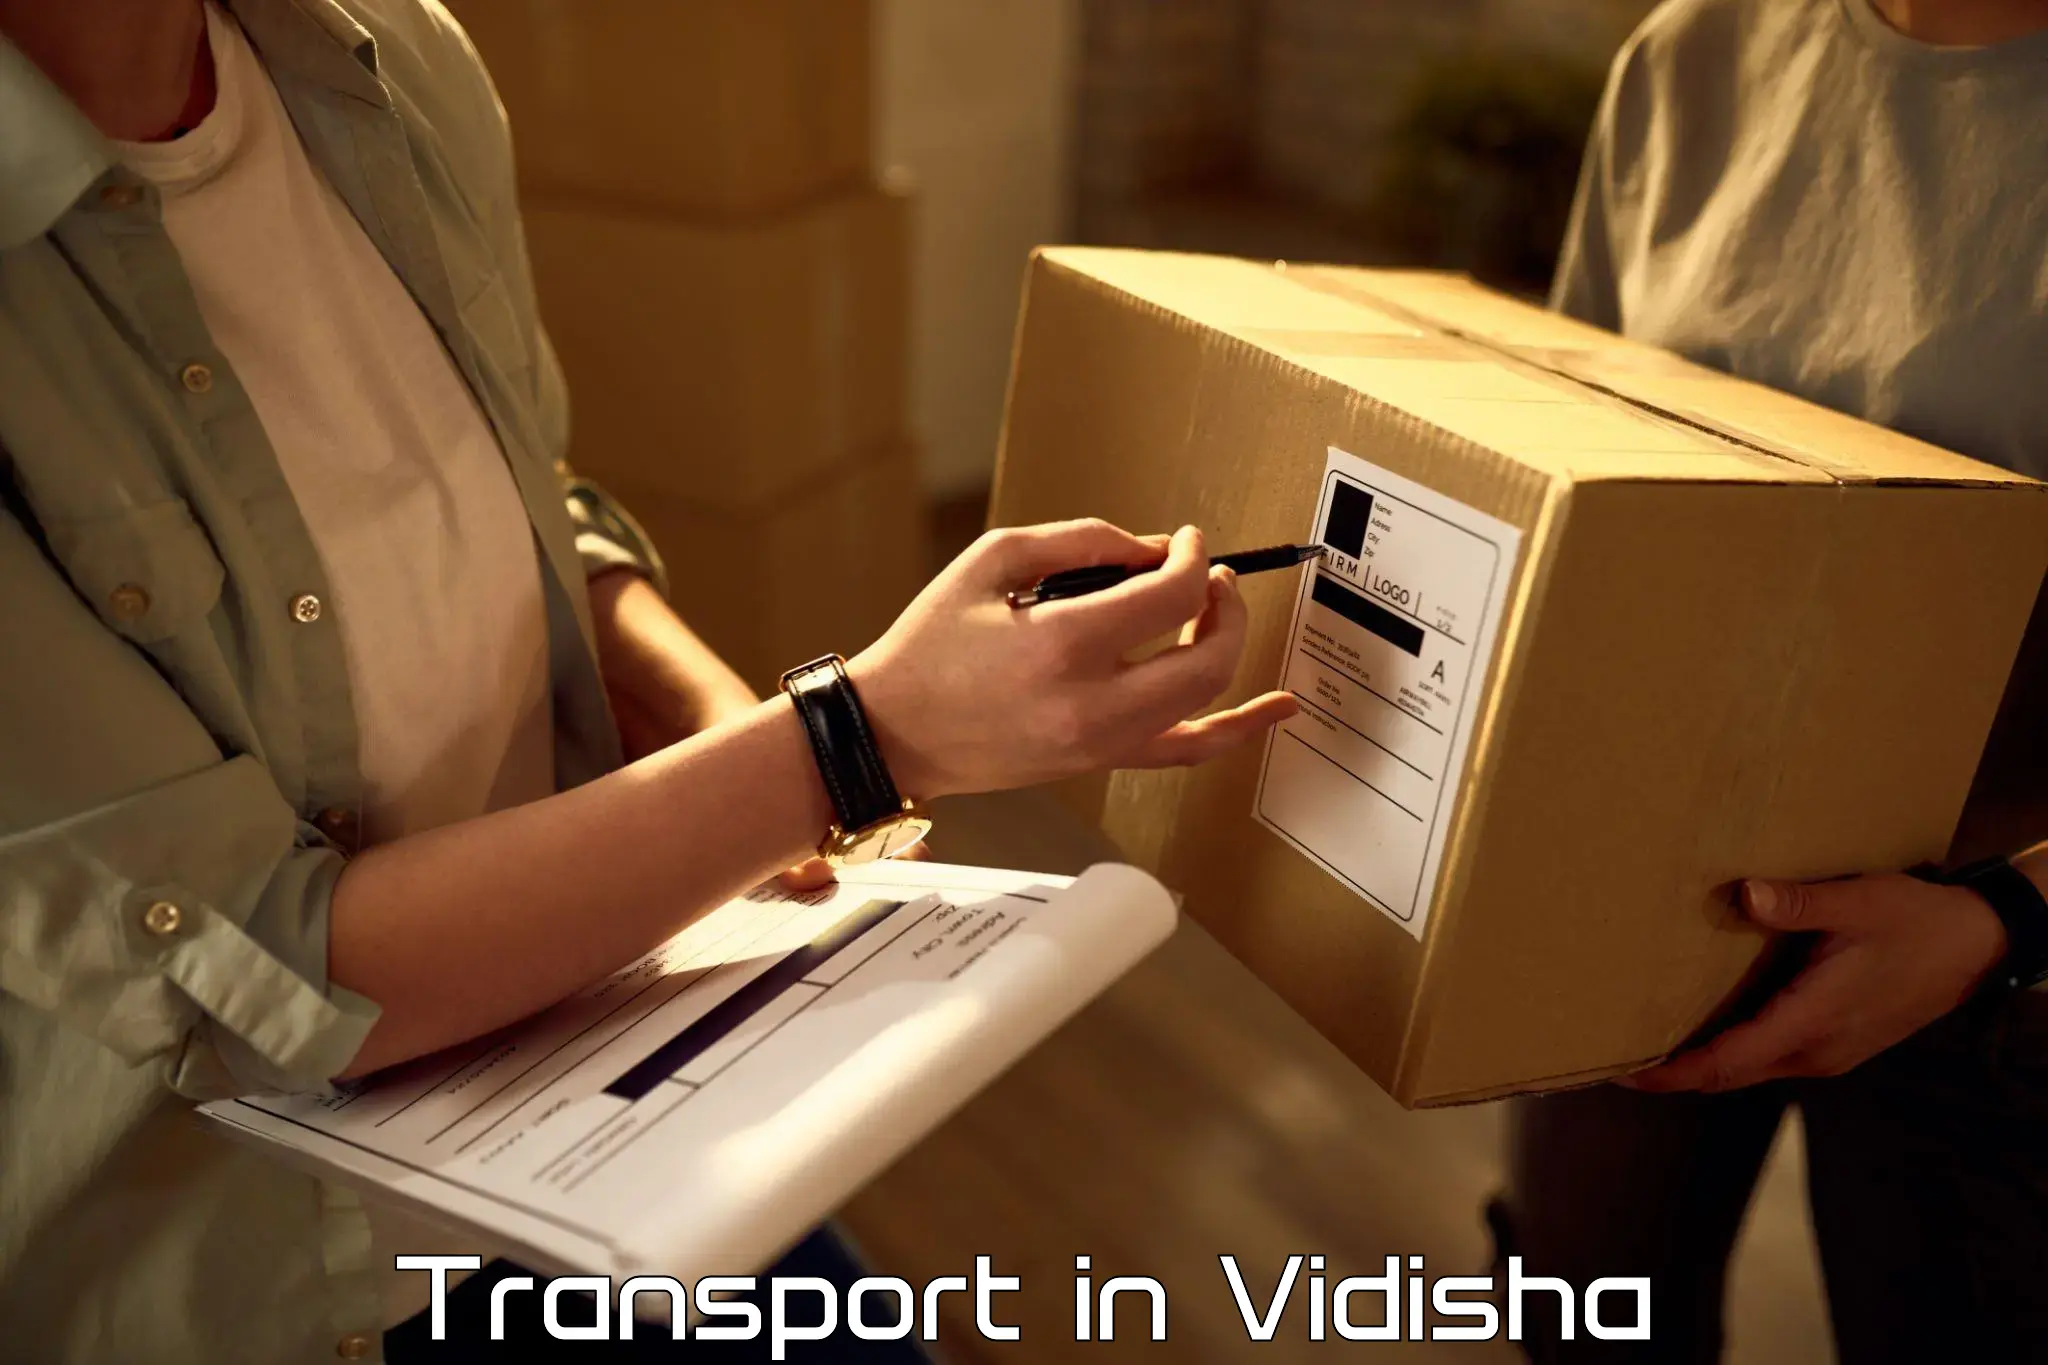 Daily transport service in Vidisha